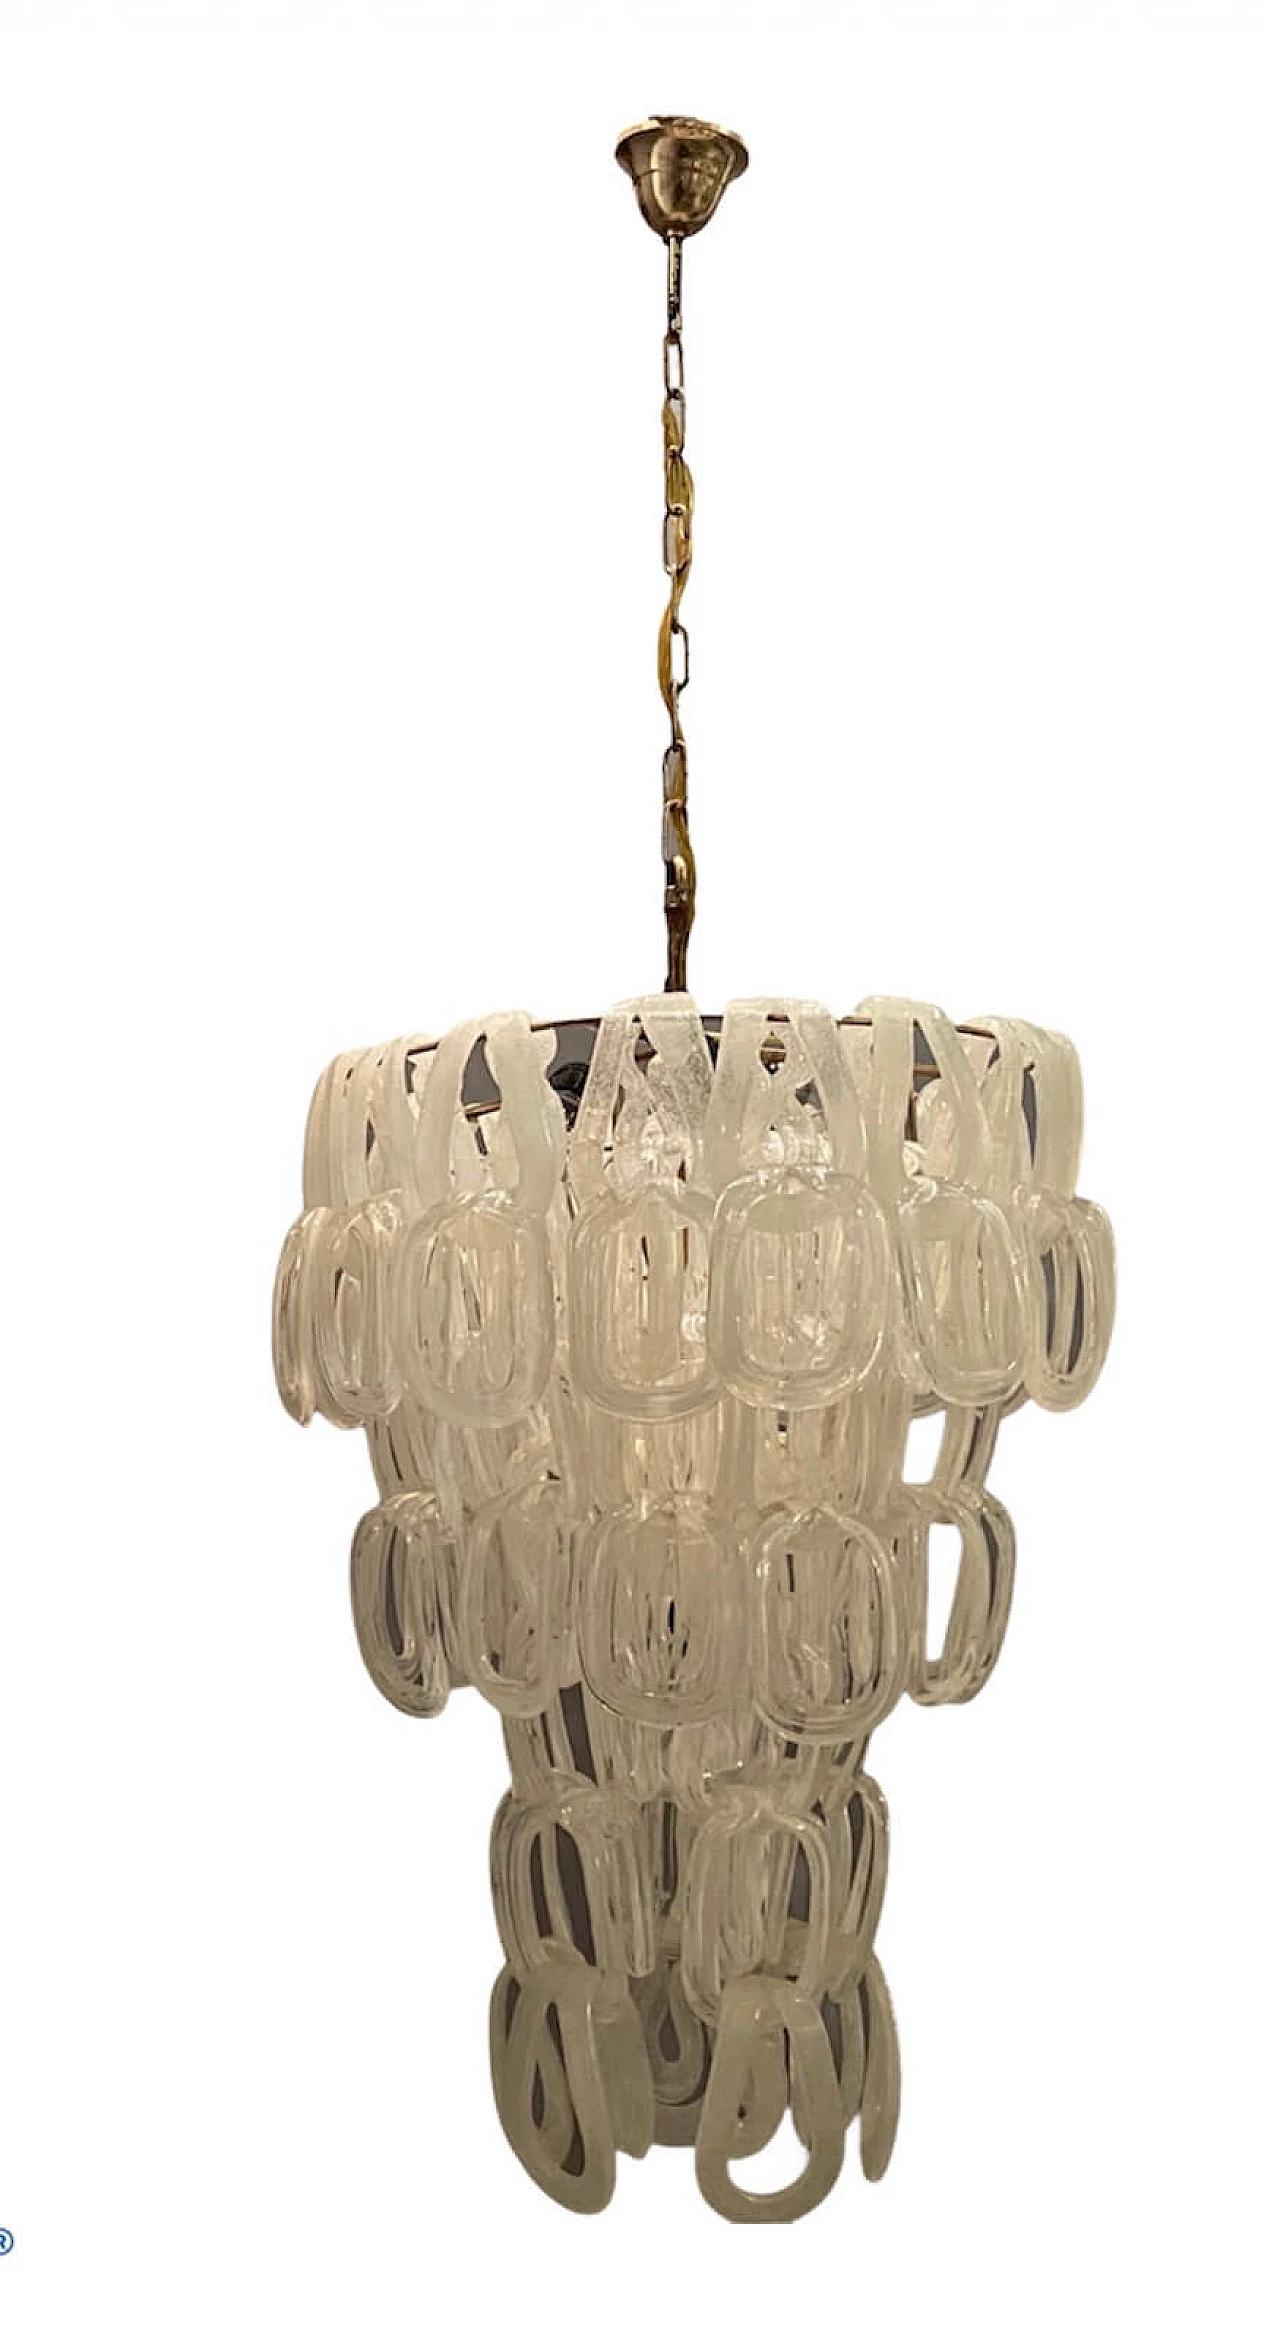 Giogali Murano glass chandelier by Angelo Mangiarotti for Vistosi, 1960s 1202301